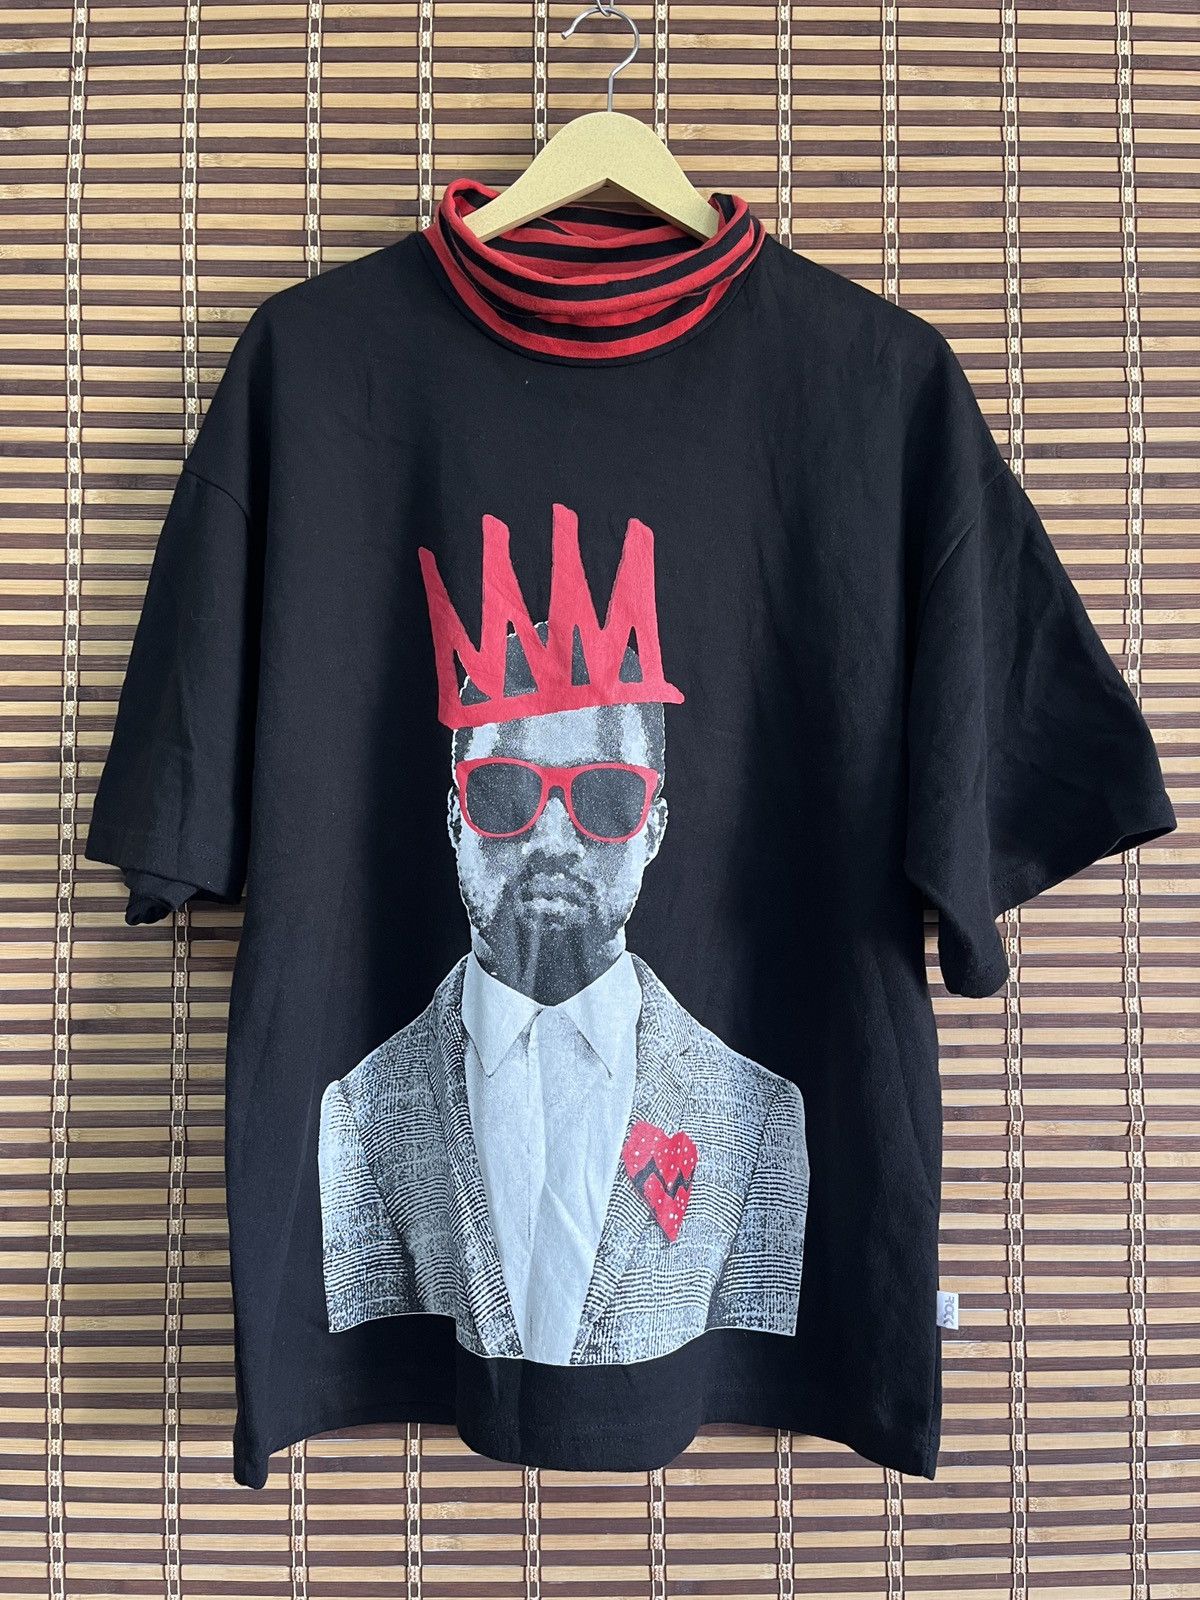 Japanese Brand - King Kanye West Printed Japan TShirt - 15